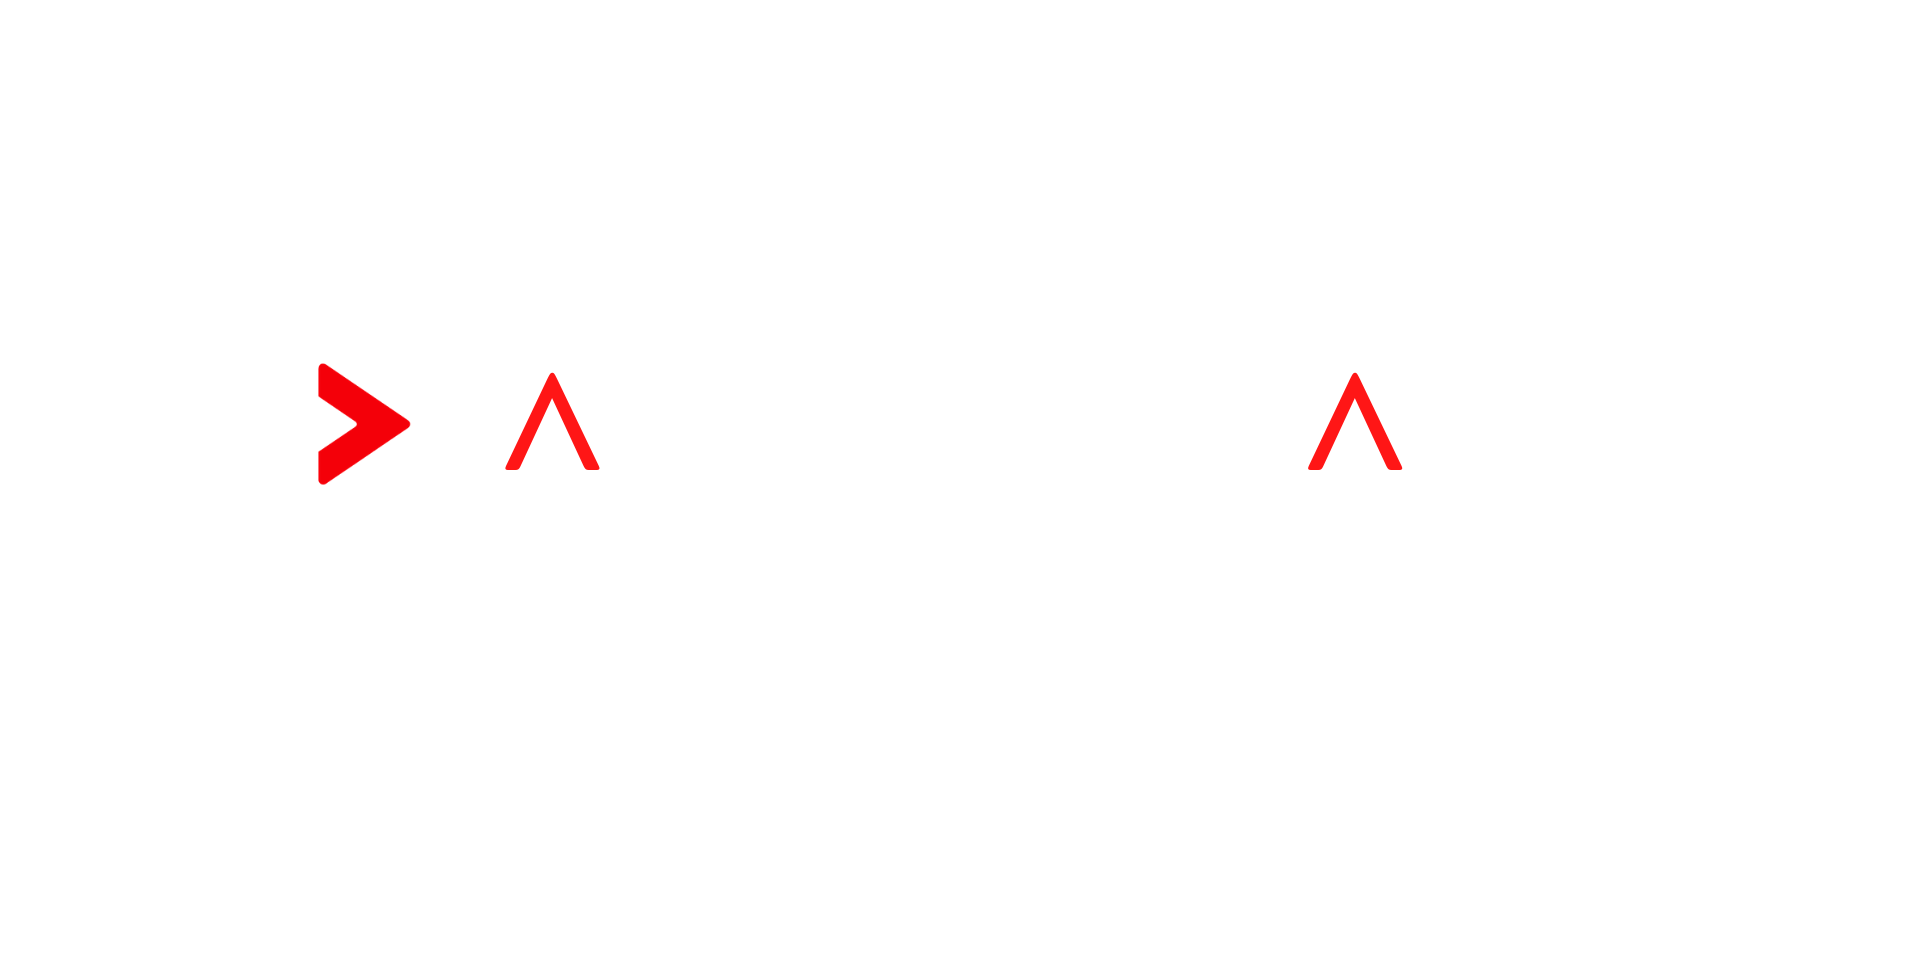 Sample Stream Header Image 2